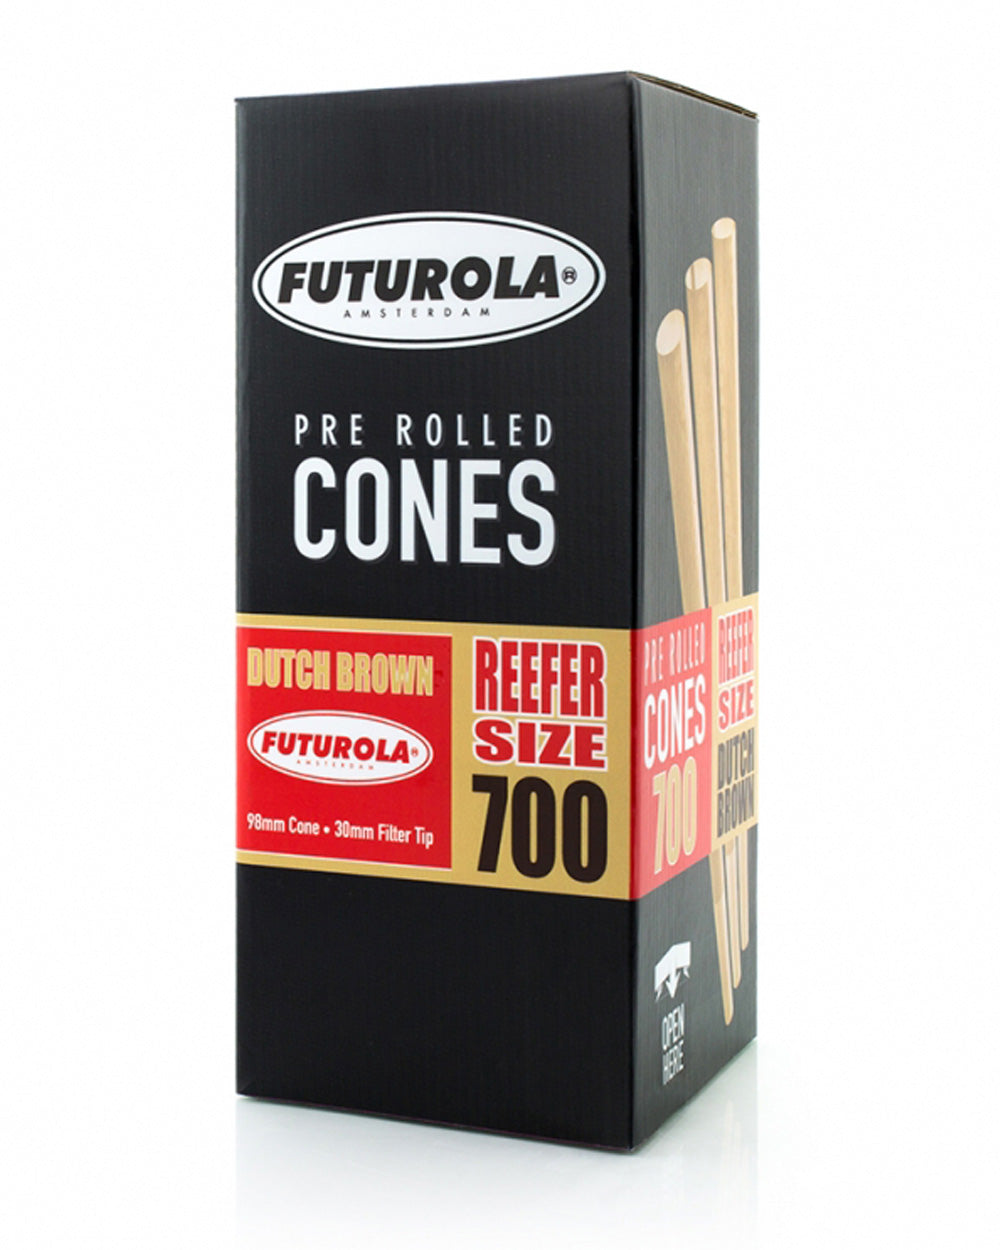 FUTUROLA | Reefer Size Pre-Rolled Cones | 98mm - Dutch Brown Paper - 700 Count - 1